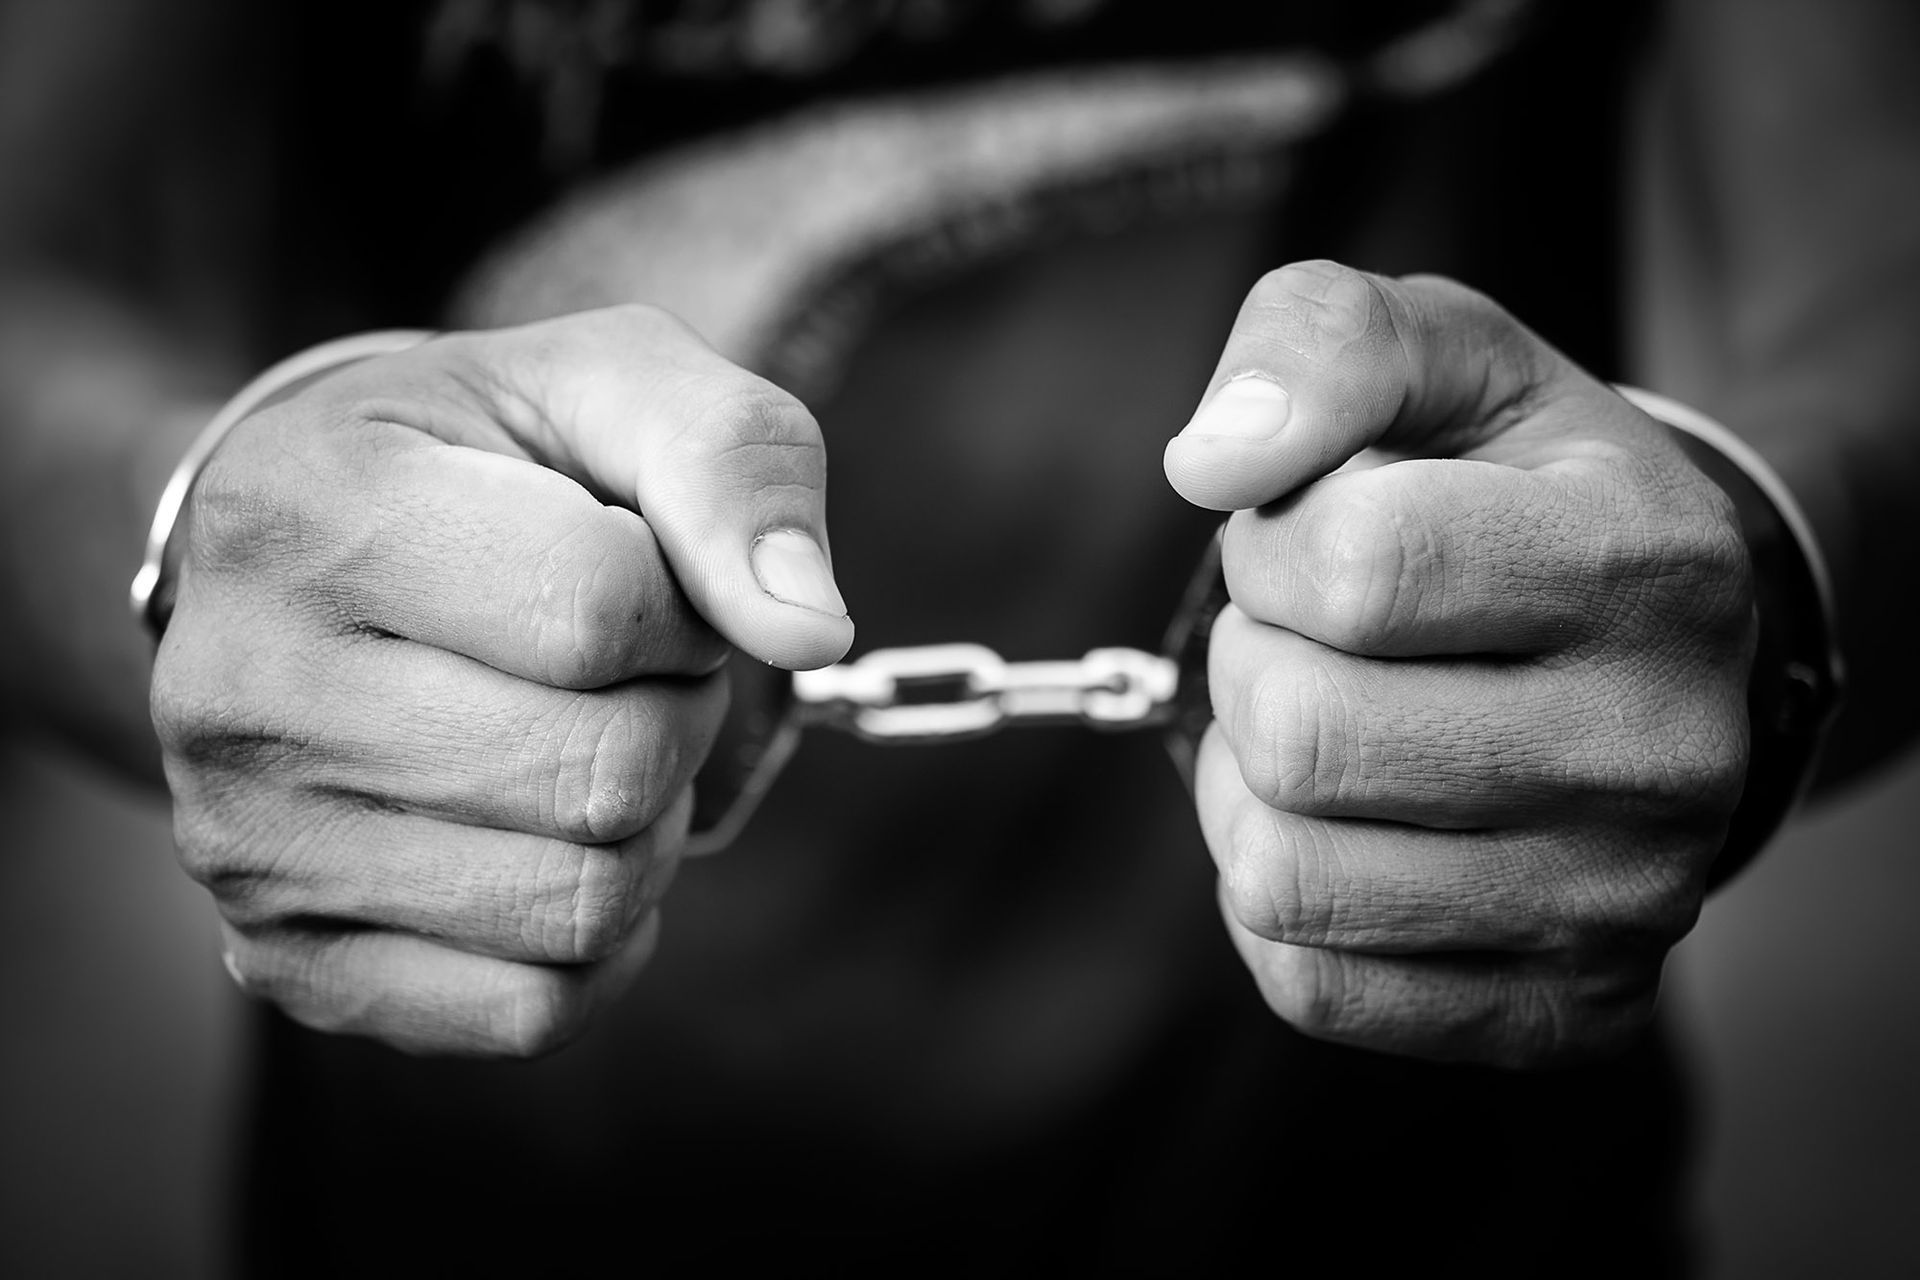 handcuffed man focuses his hand